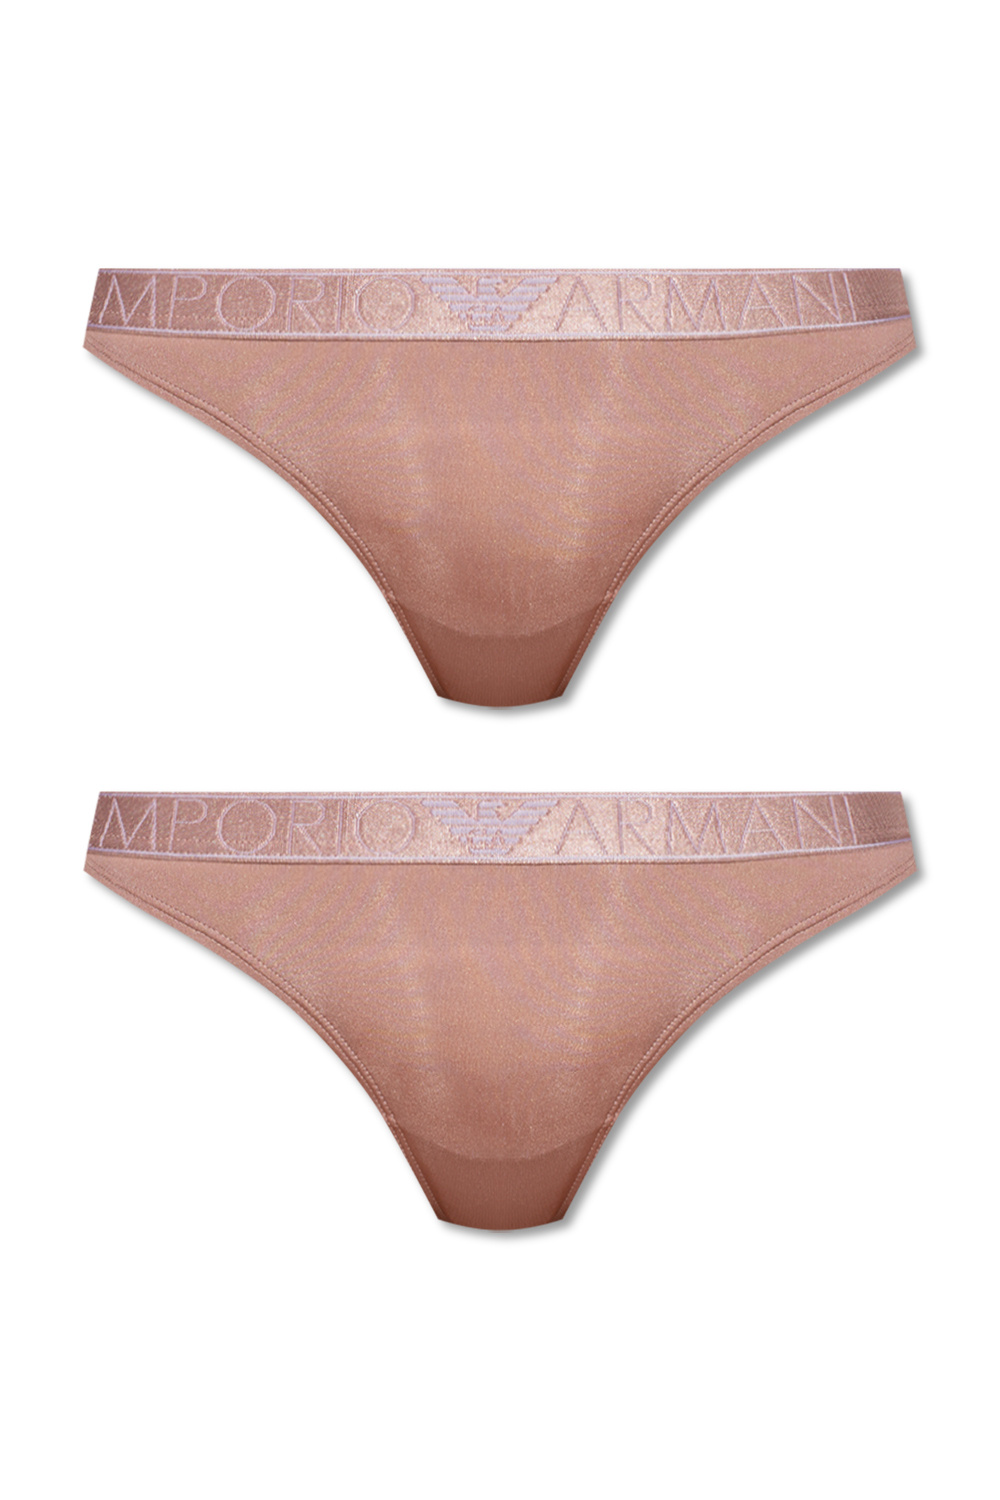 Emporio Armani Branded thongs 2-pack